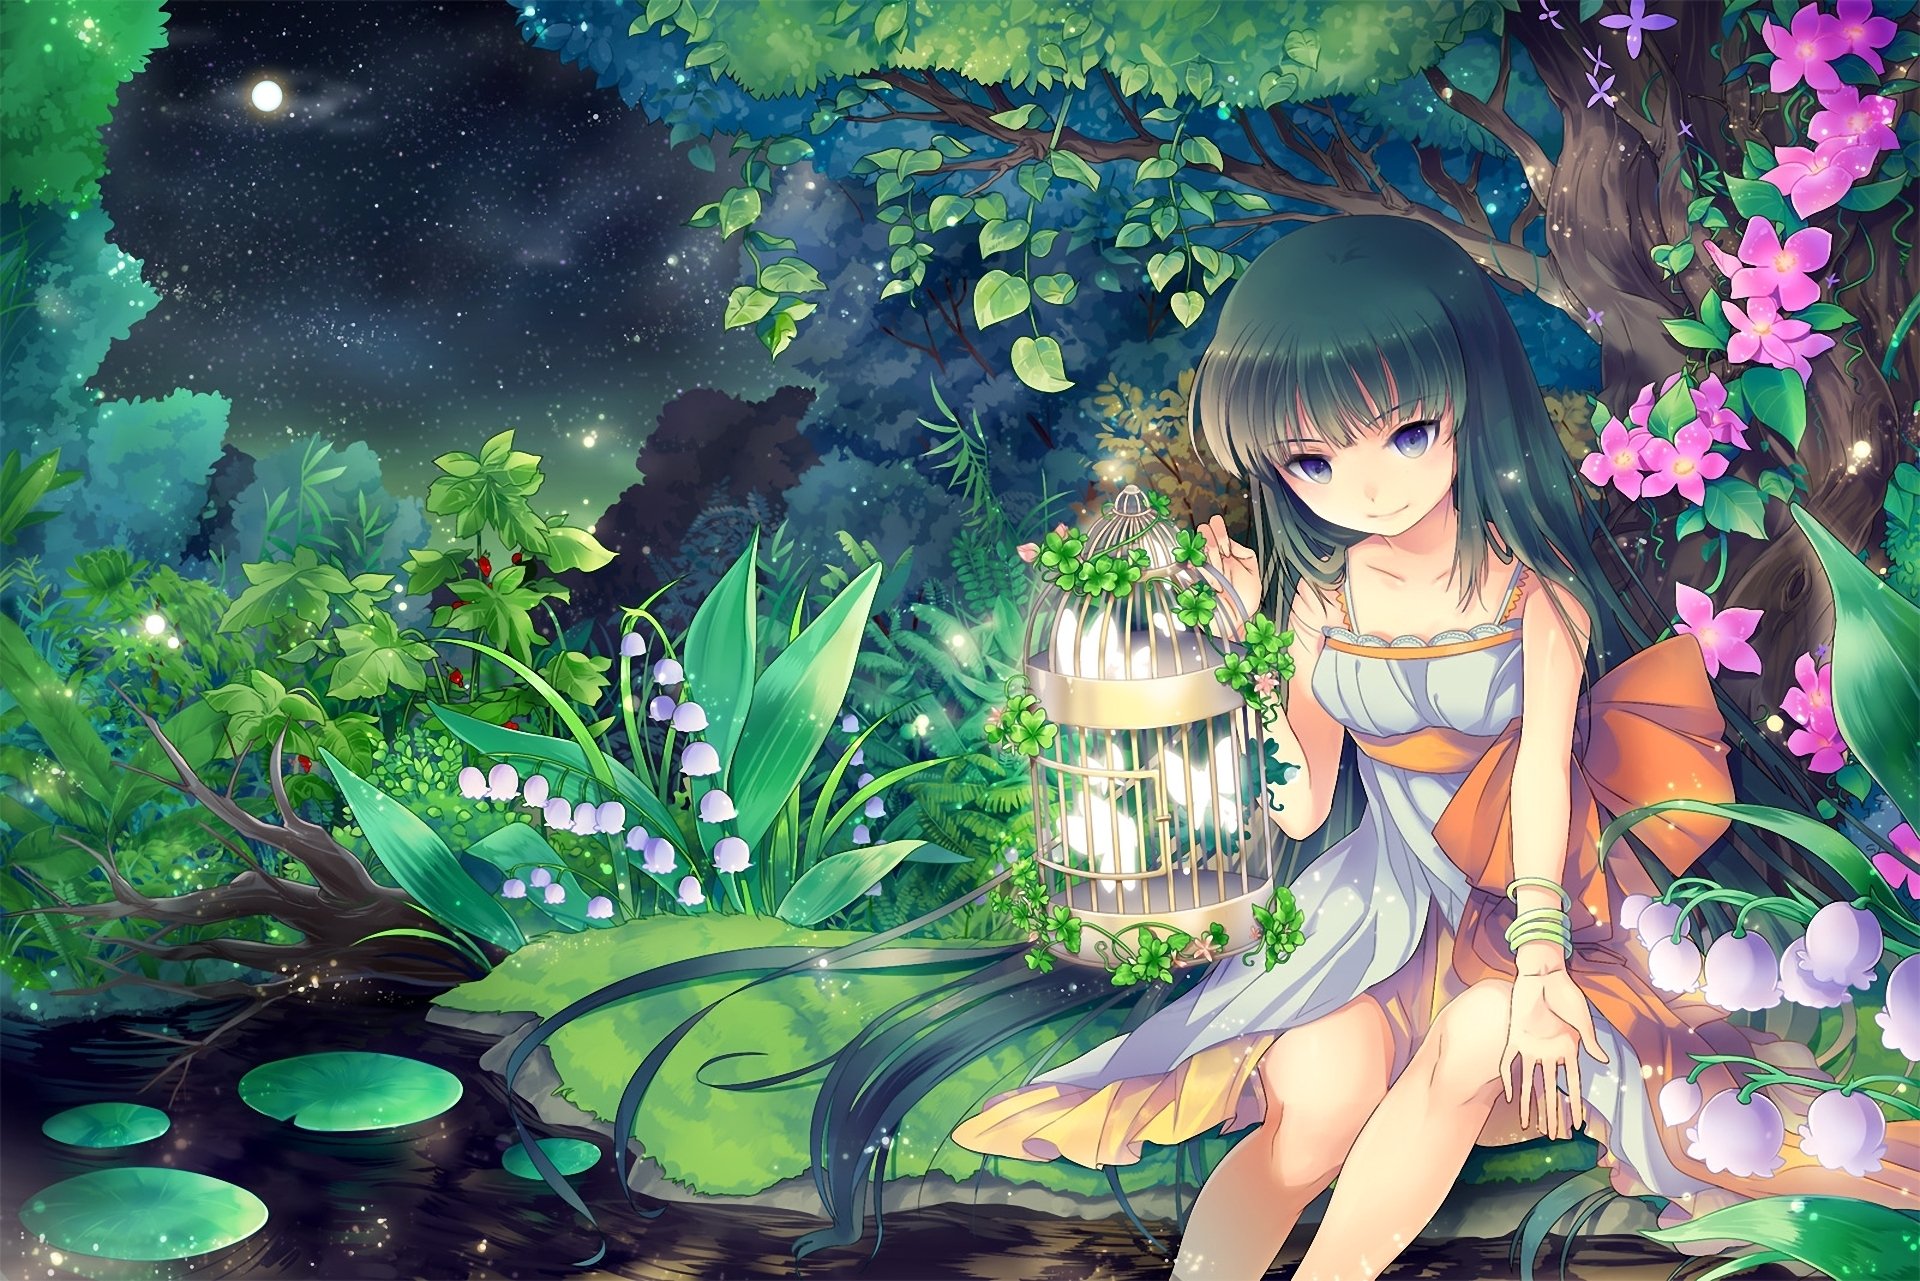 Anime Girl in Spring Forest